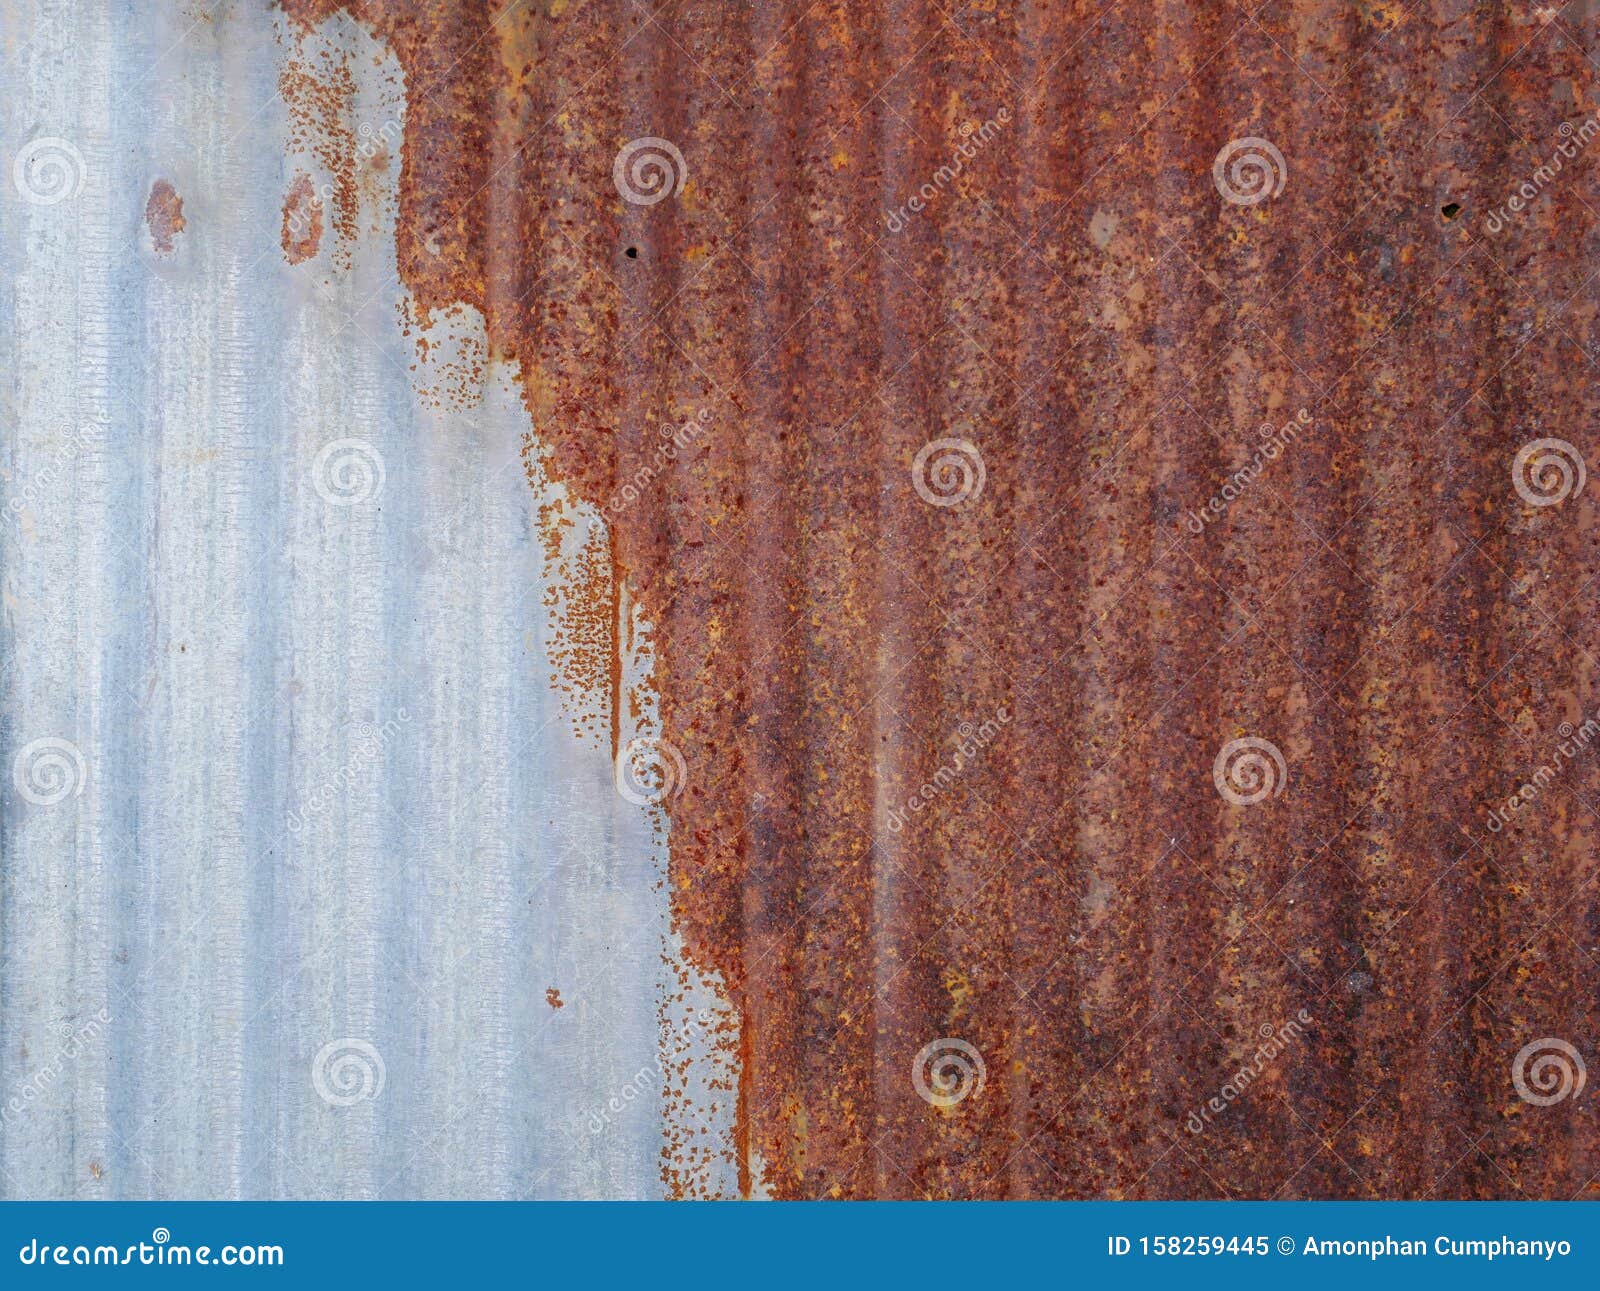 Rust on a wall фото 91